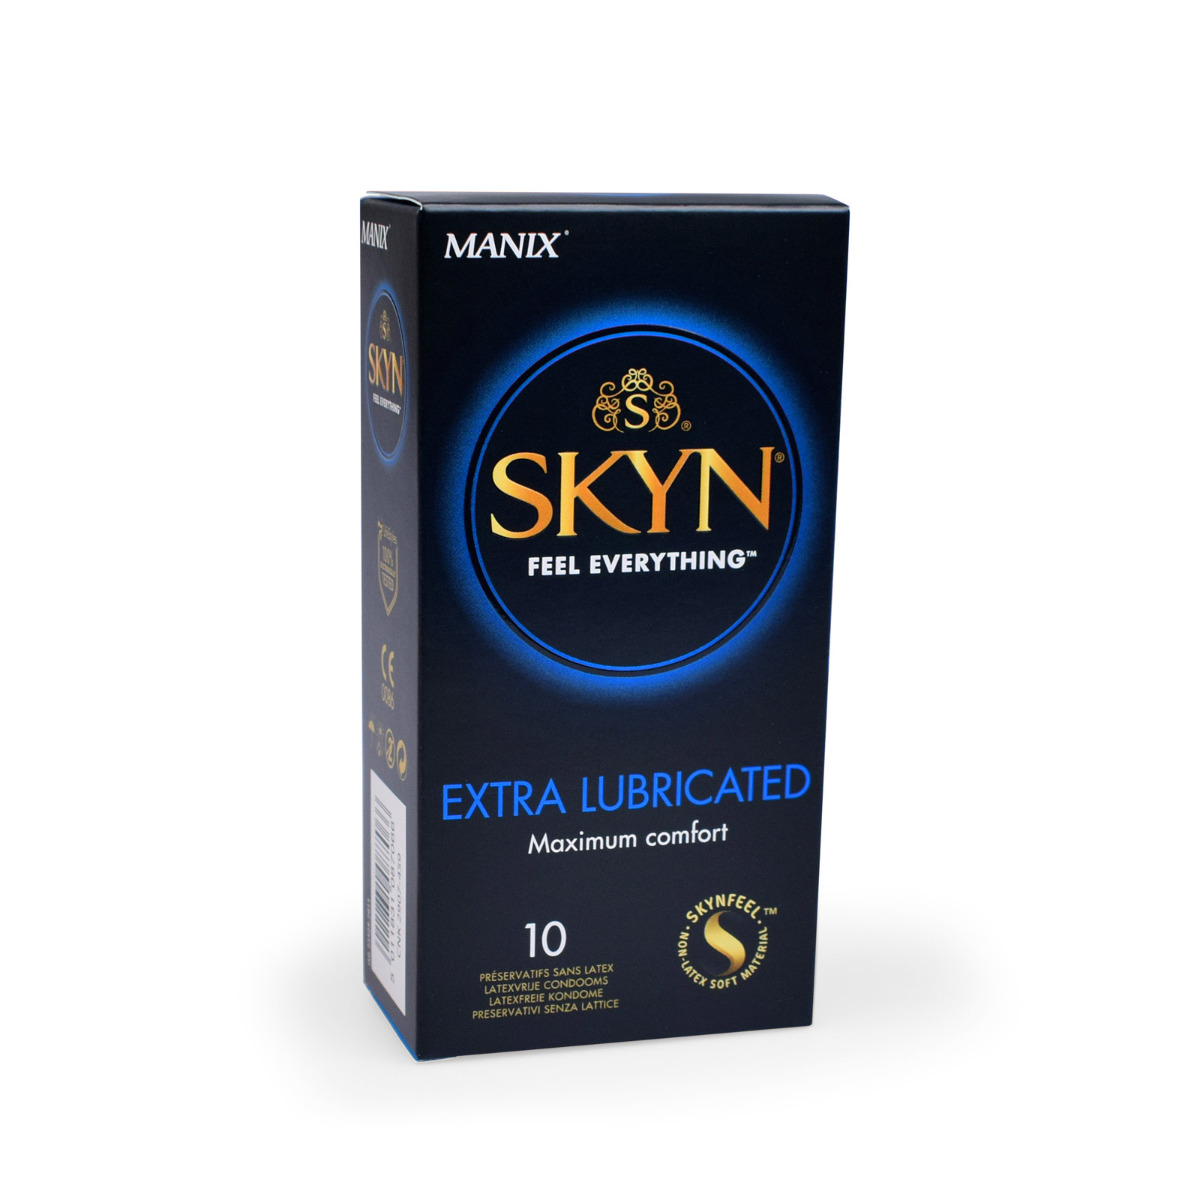 Manix Skyn Extra Lubricated